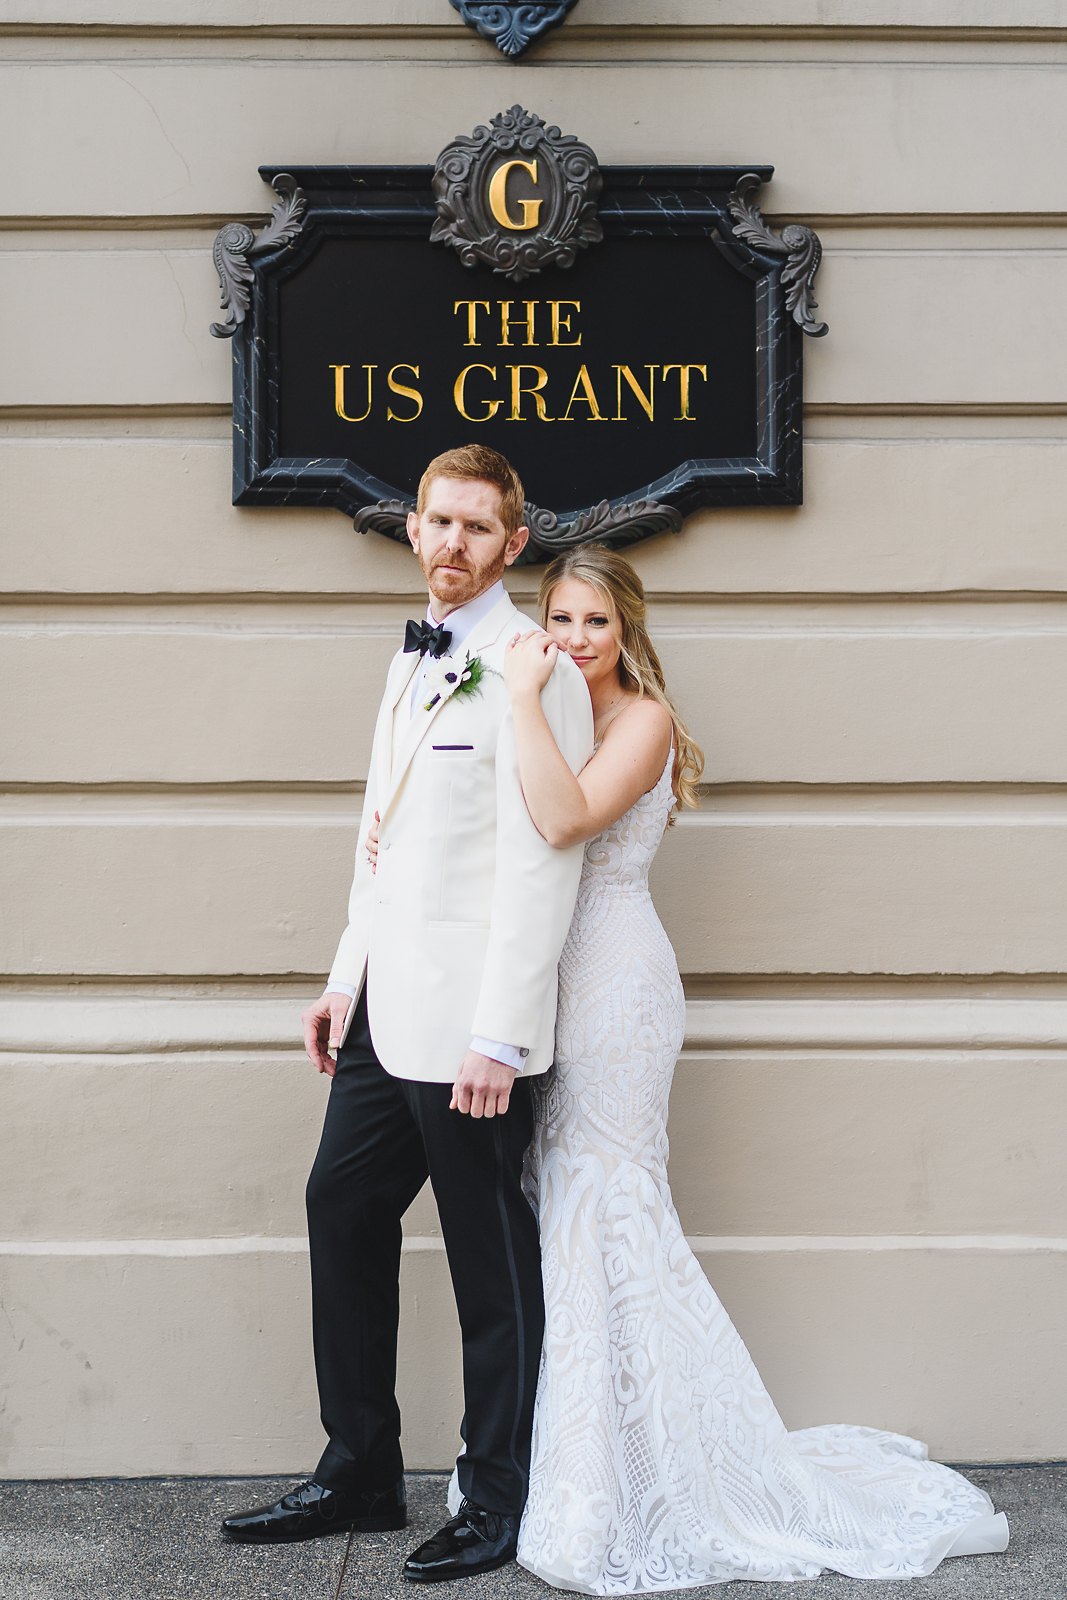 The US Grant wedding